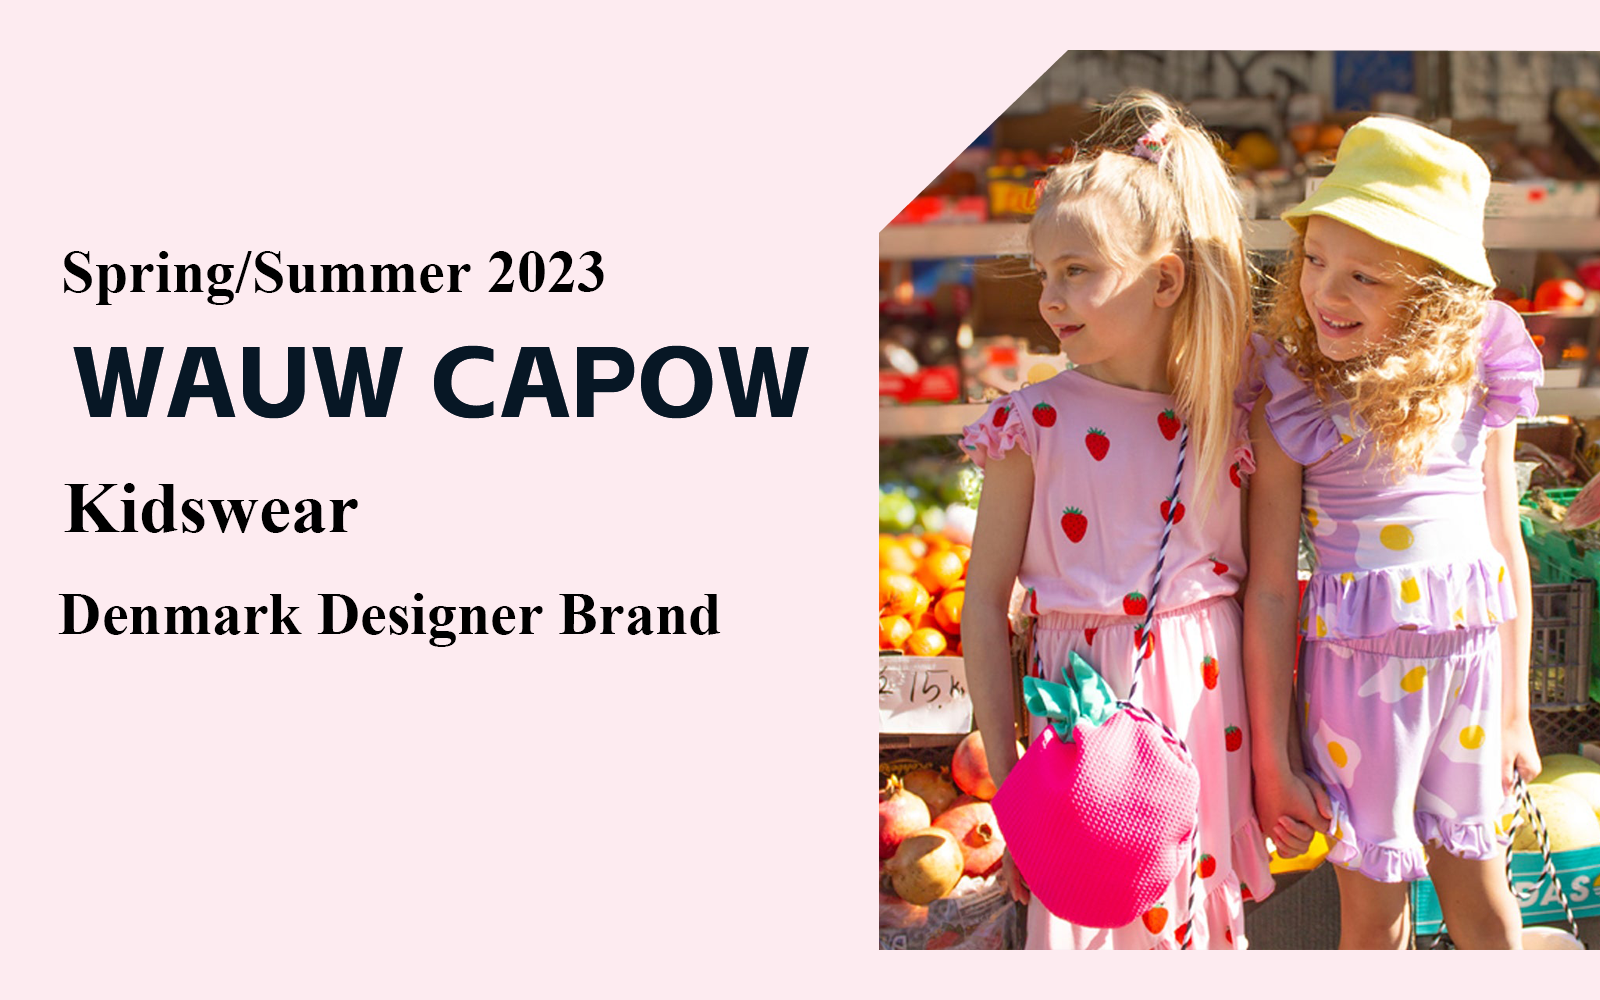 Childlike Art -- The Analysis of Wauw Capow The Kidswear Designer Brand